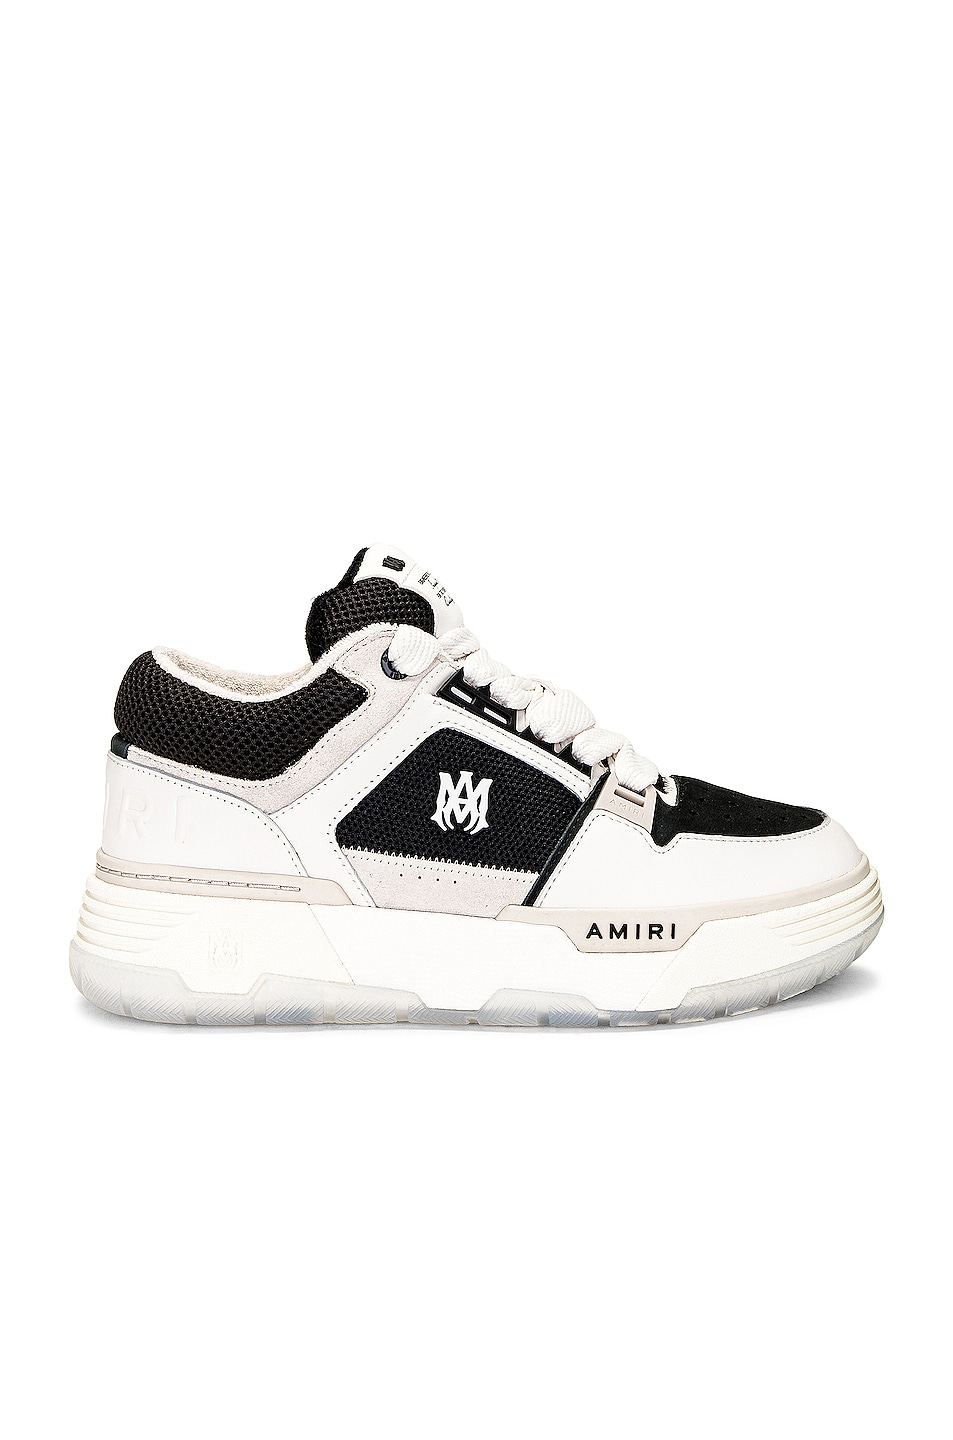 Amiri Ma-1 Sneaker in White | FWRD